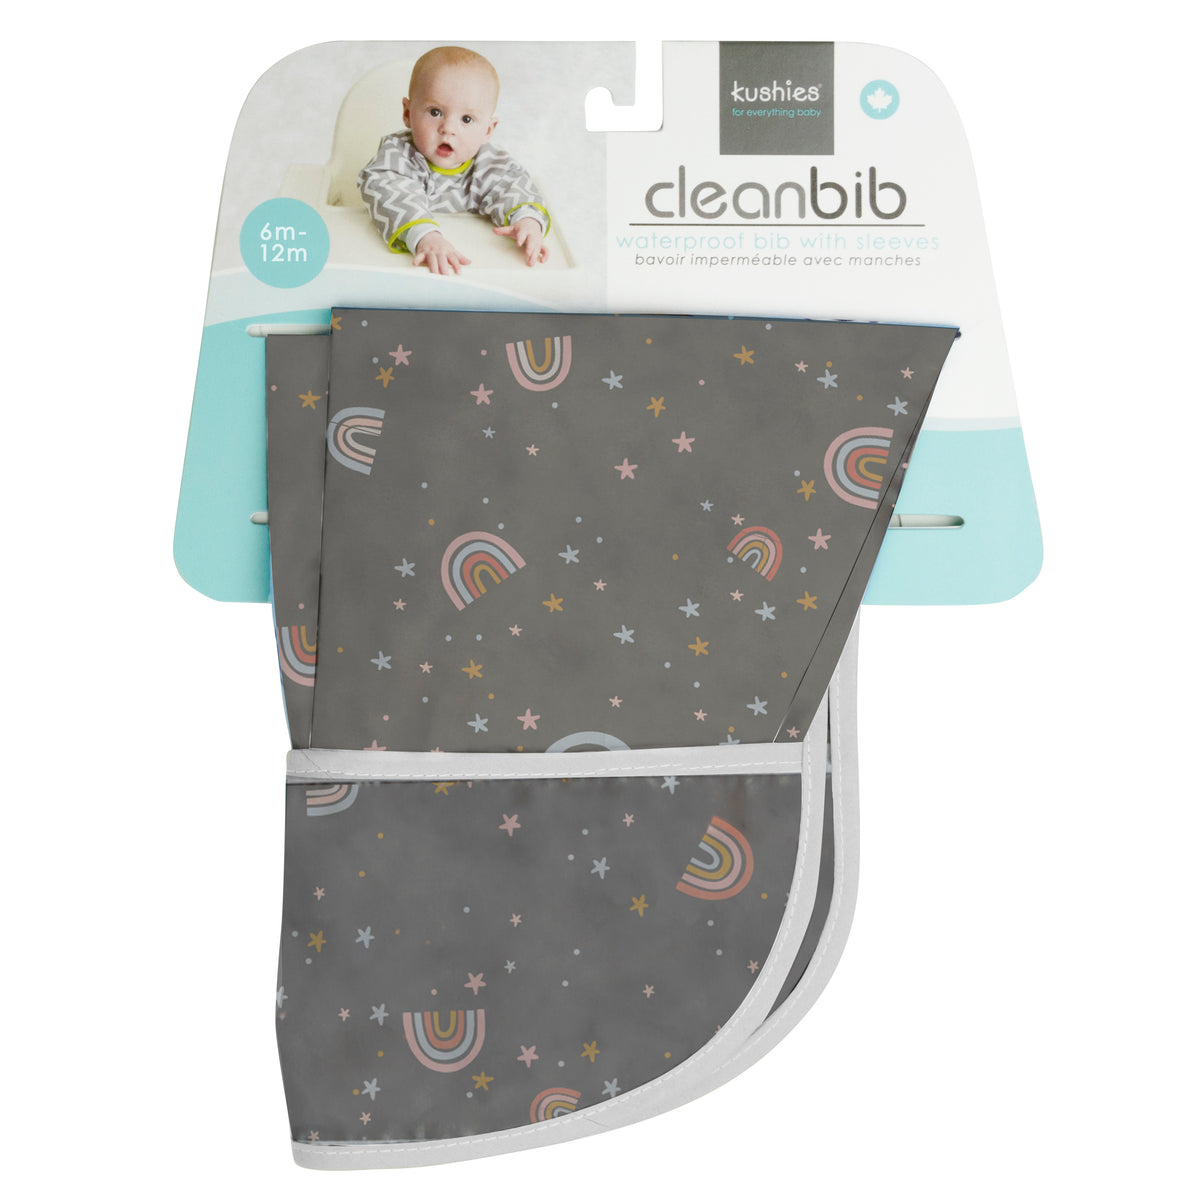 Cleanbib | With Sleeves